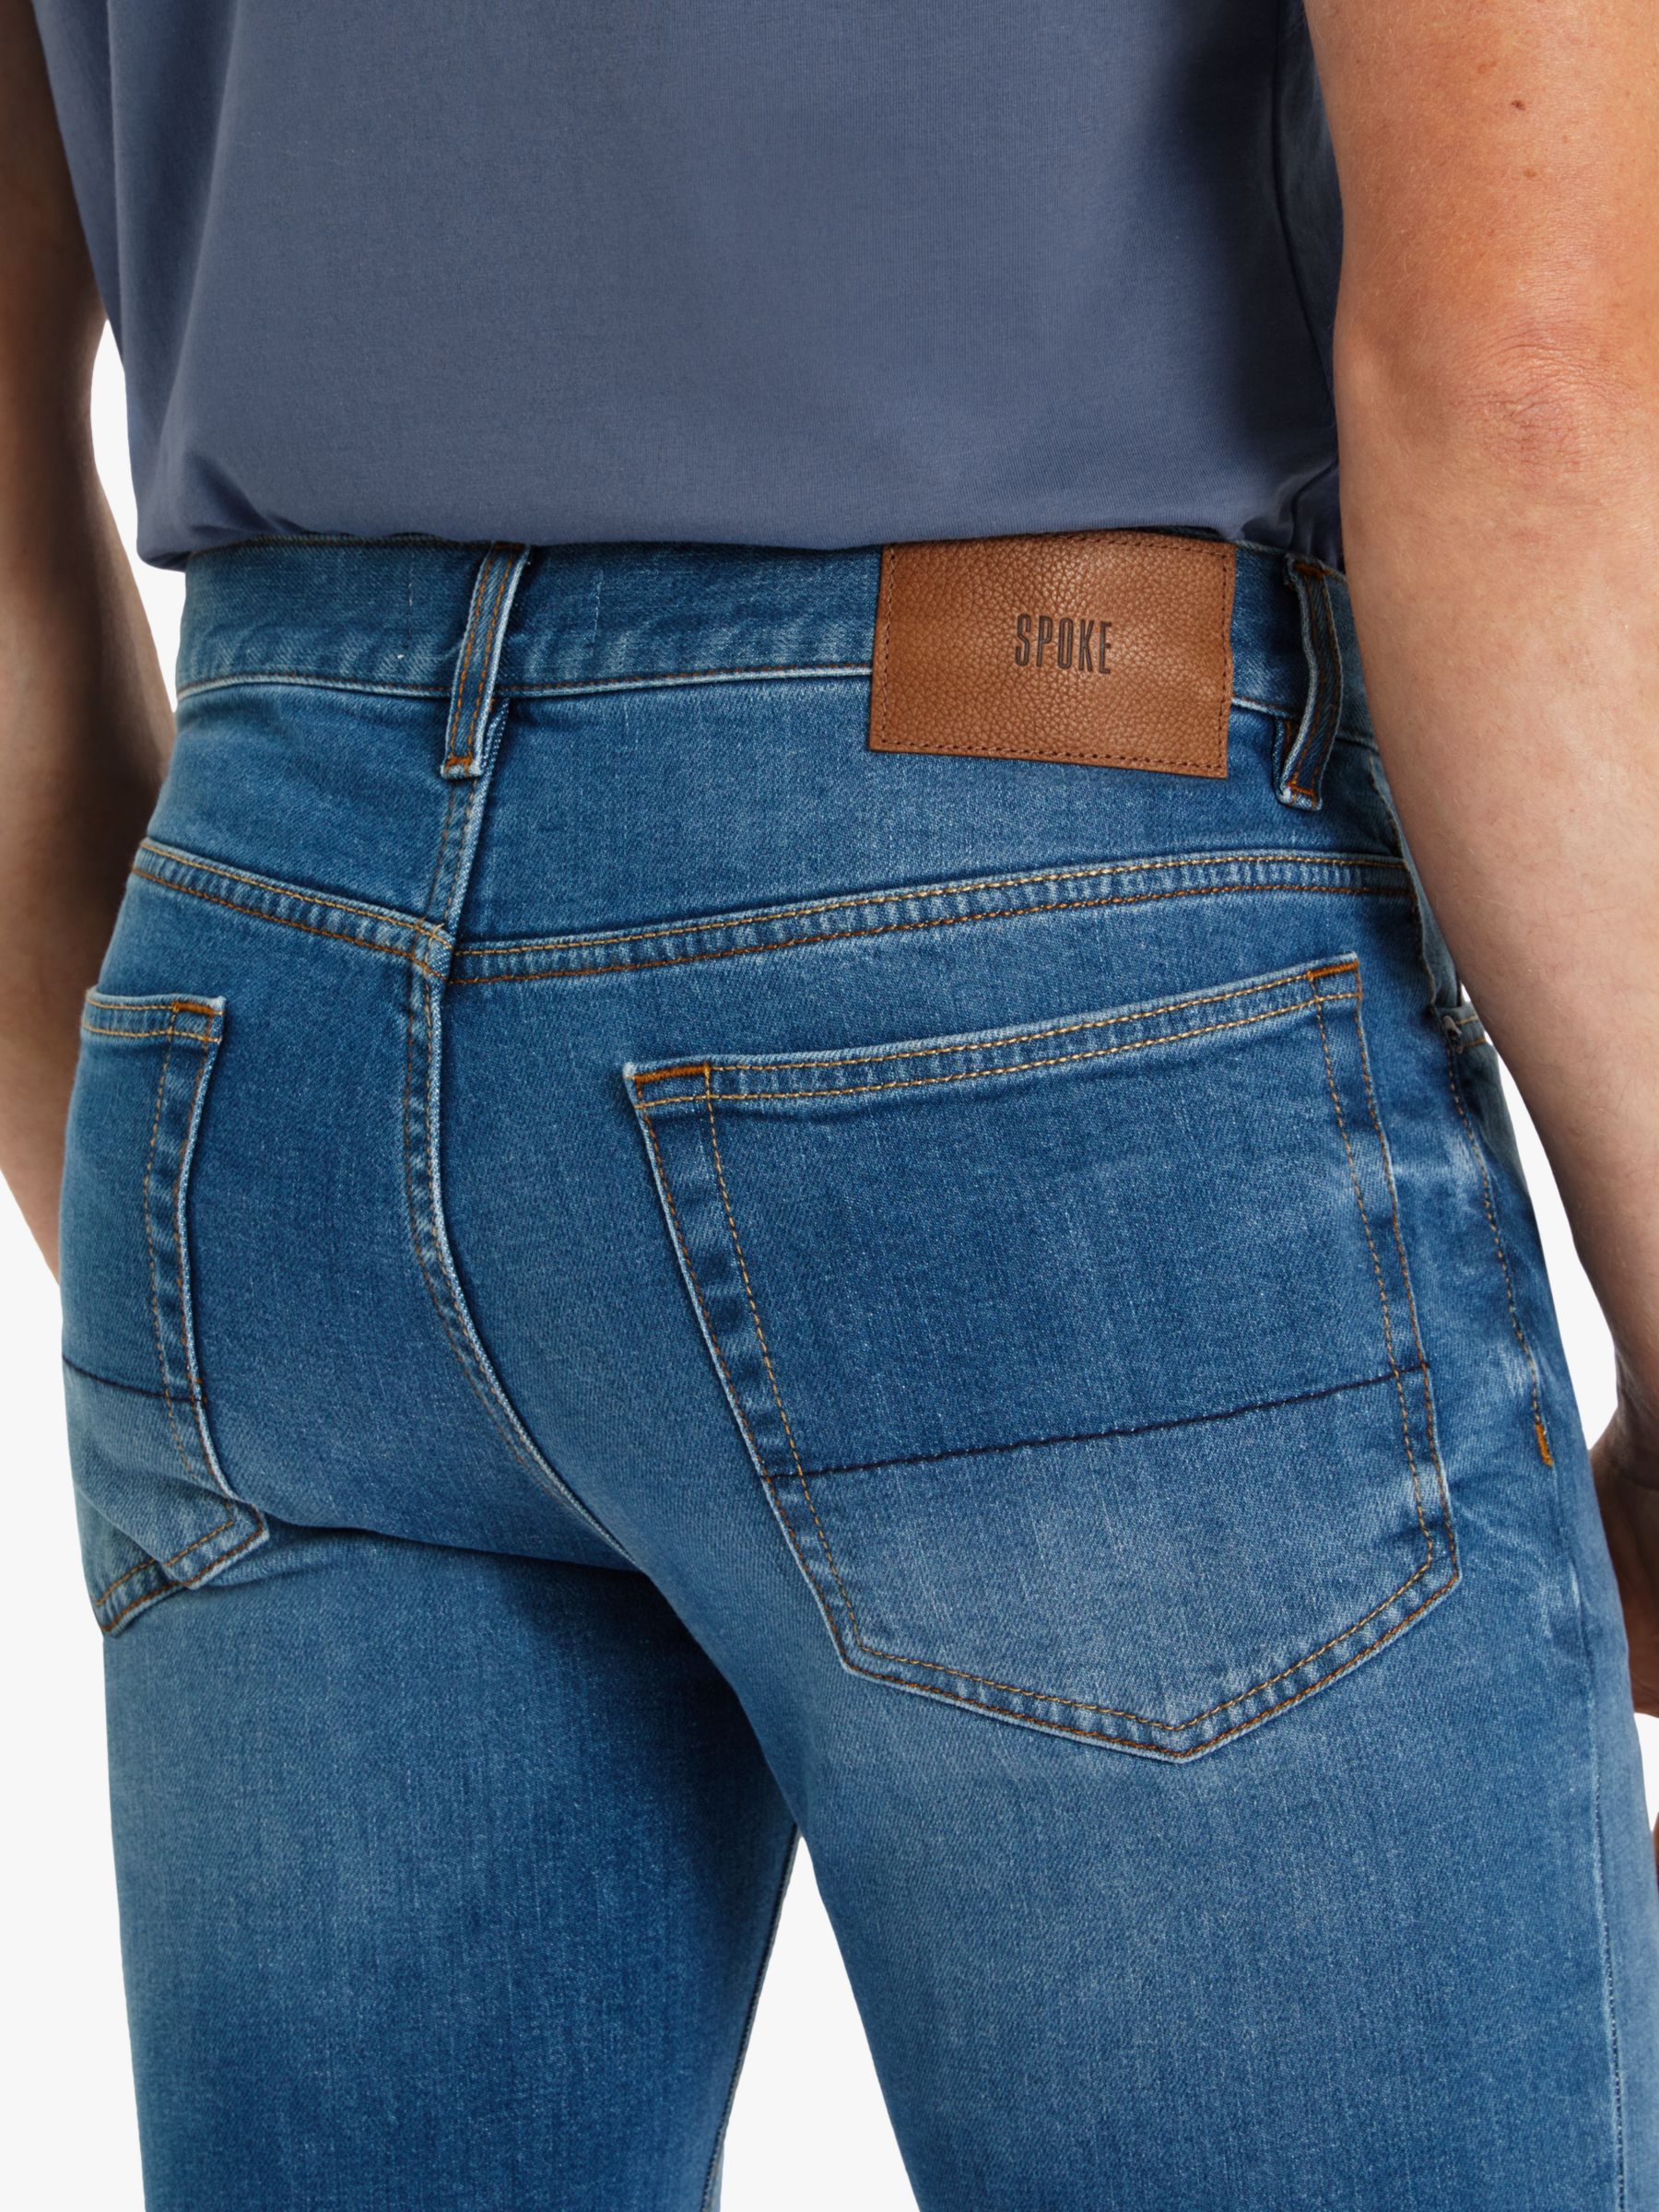 SPOKE Italian Denim Regular Thigh Jeans, 5 Year at John Lewis & Partners